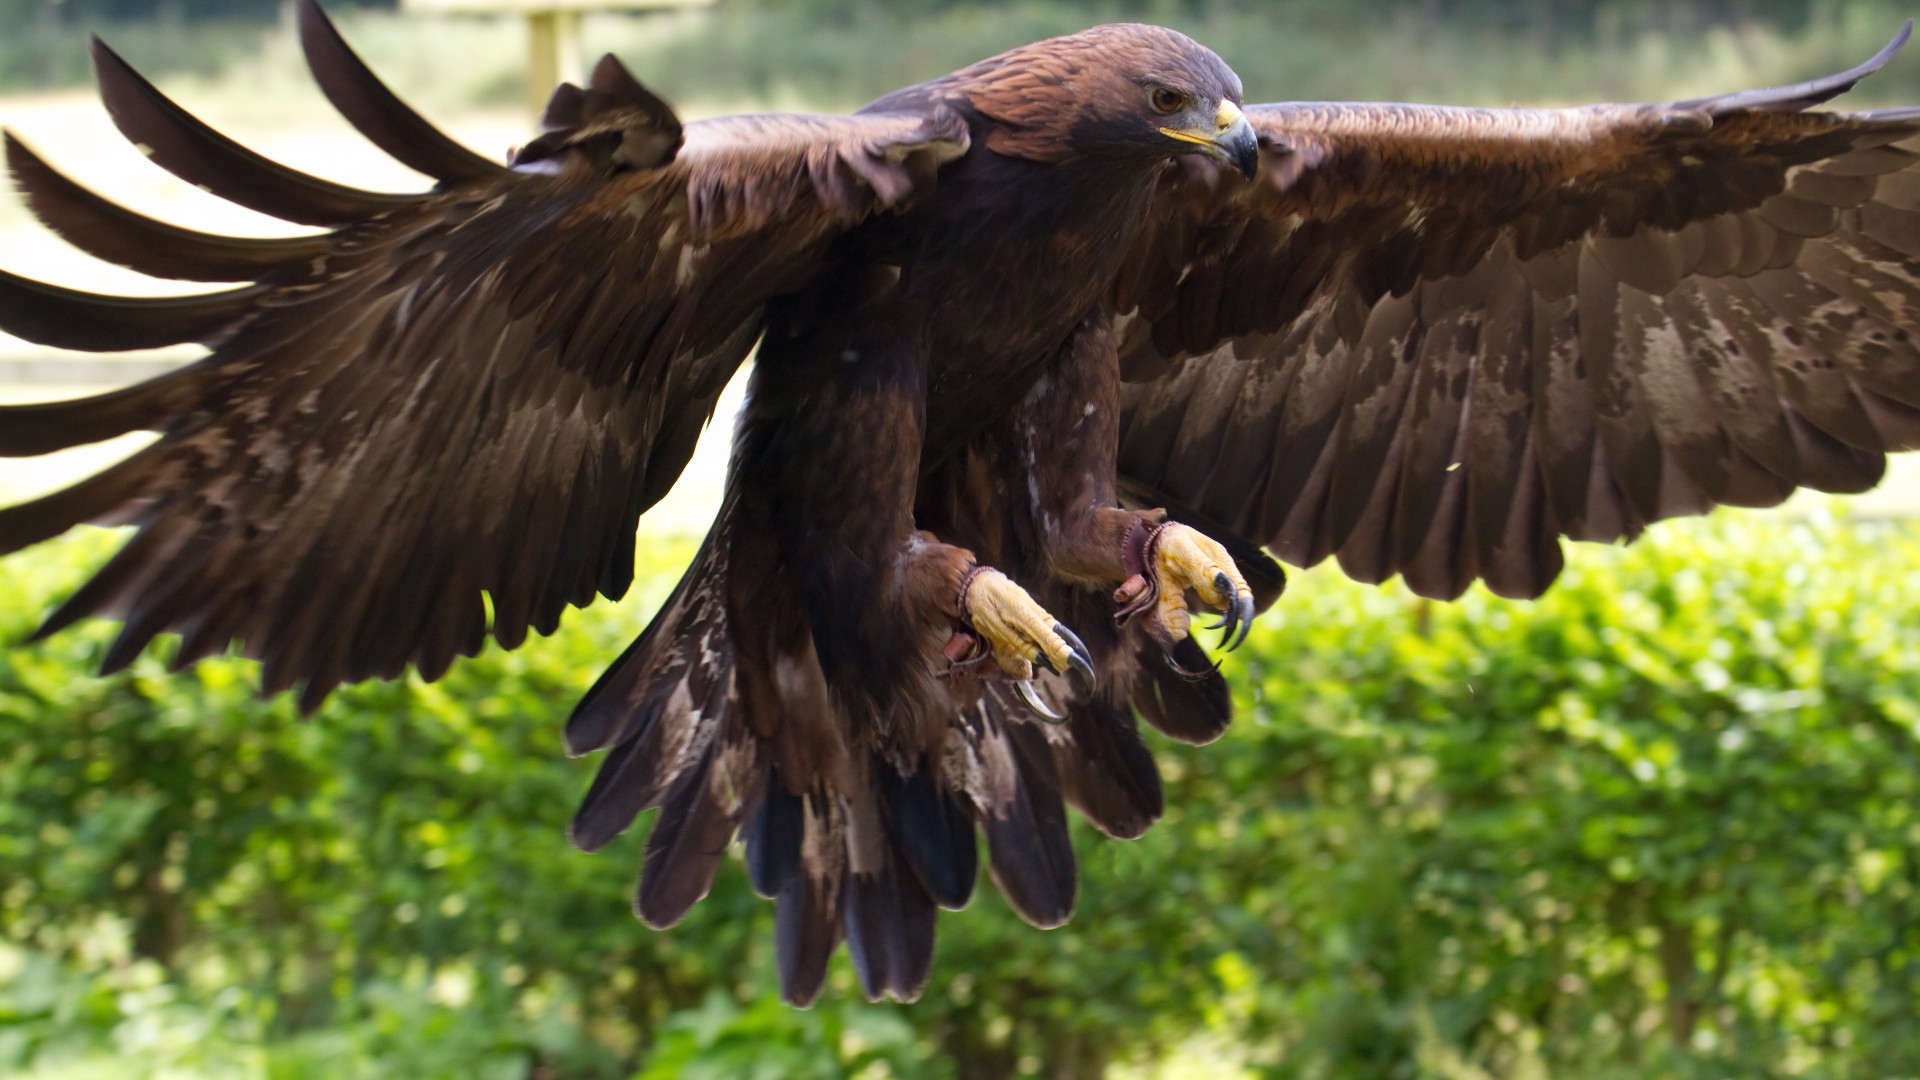 Golden Eagle, Mexico, bird, animal, nature, wings, brown, green grass, tourism (horizontal)